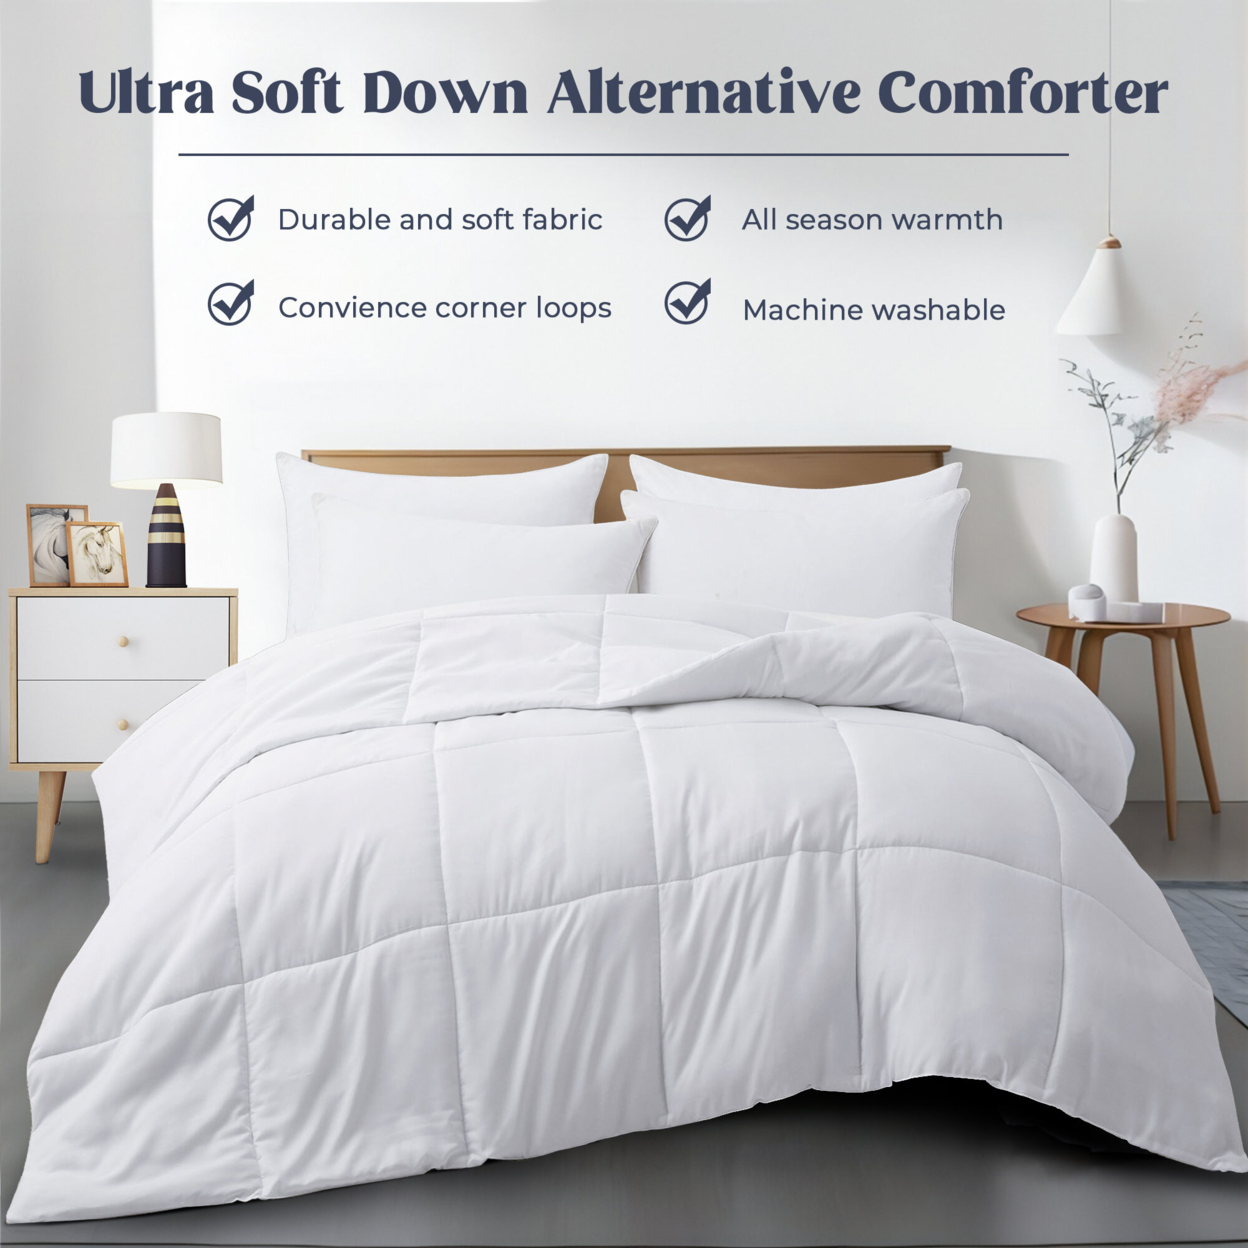 All Season Down Alternative Comforter - White, King